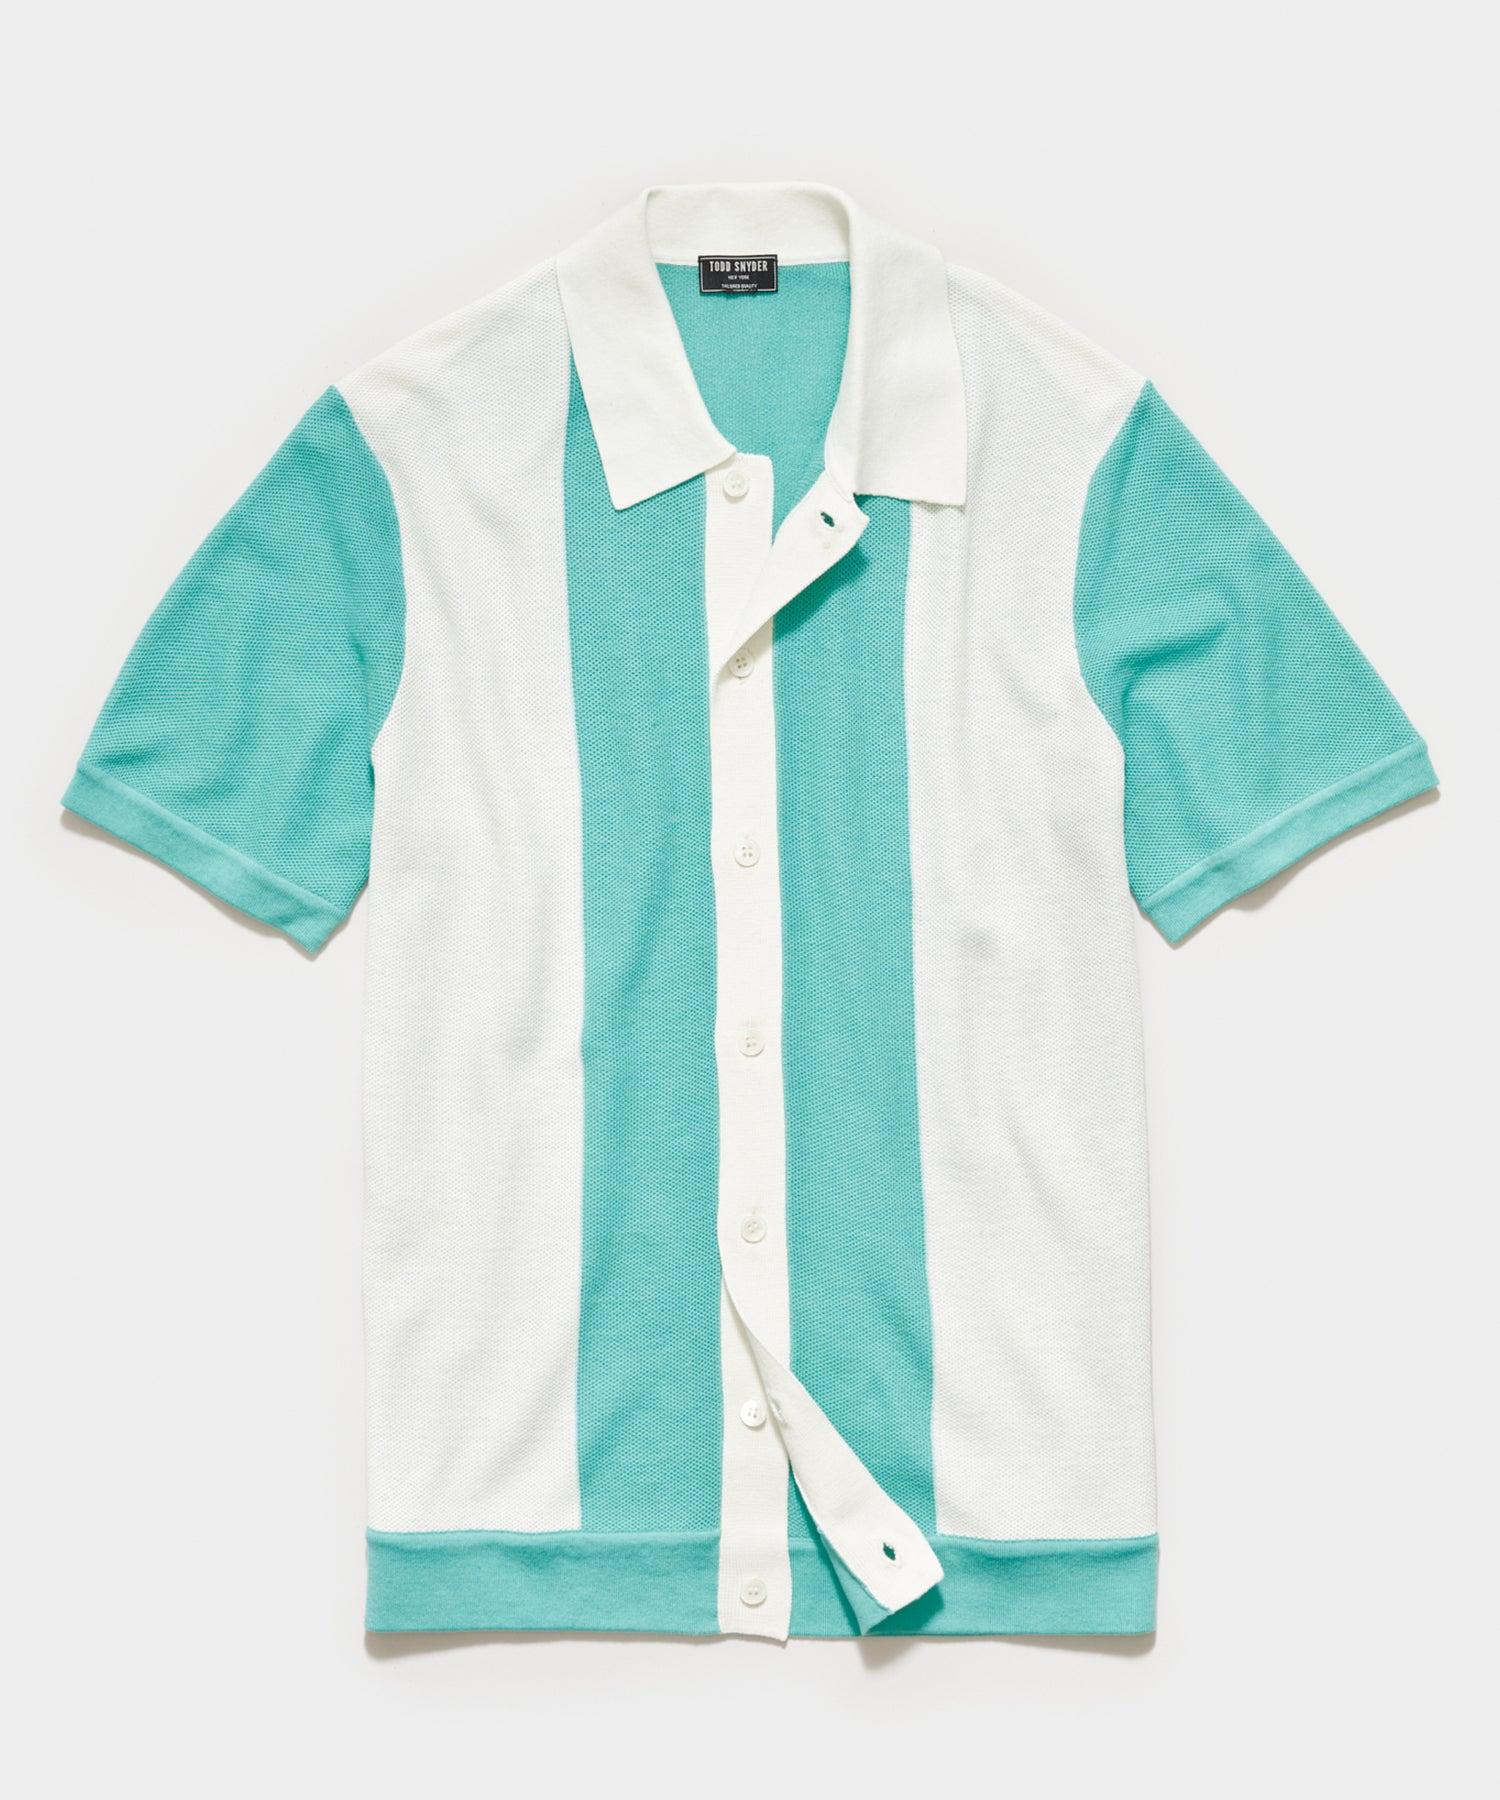 Maddins-Mens Poloshirts-Tops-Coloursure polo shirt plaquet sweatshirt 